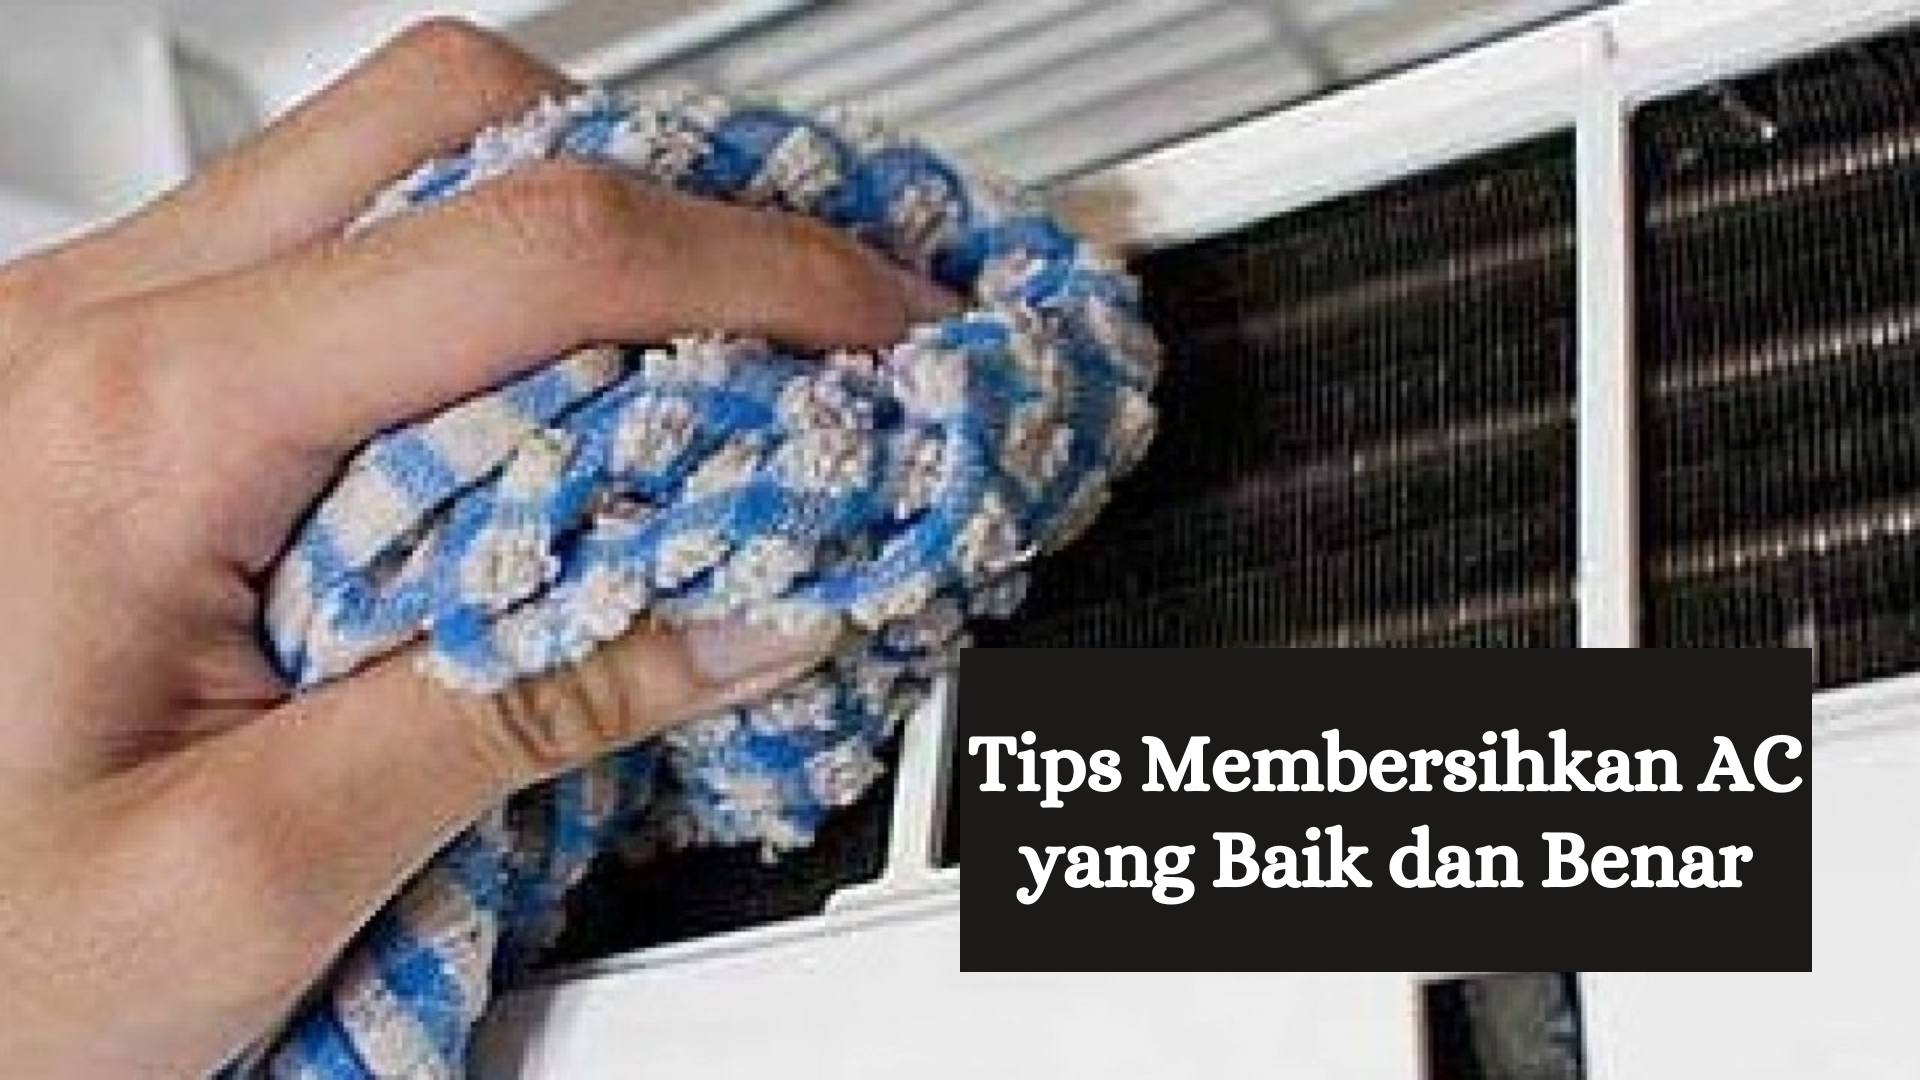 Tips Membersihkan AC yang Baik dan Benar